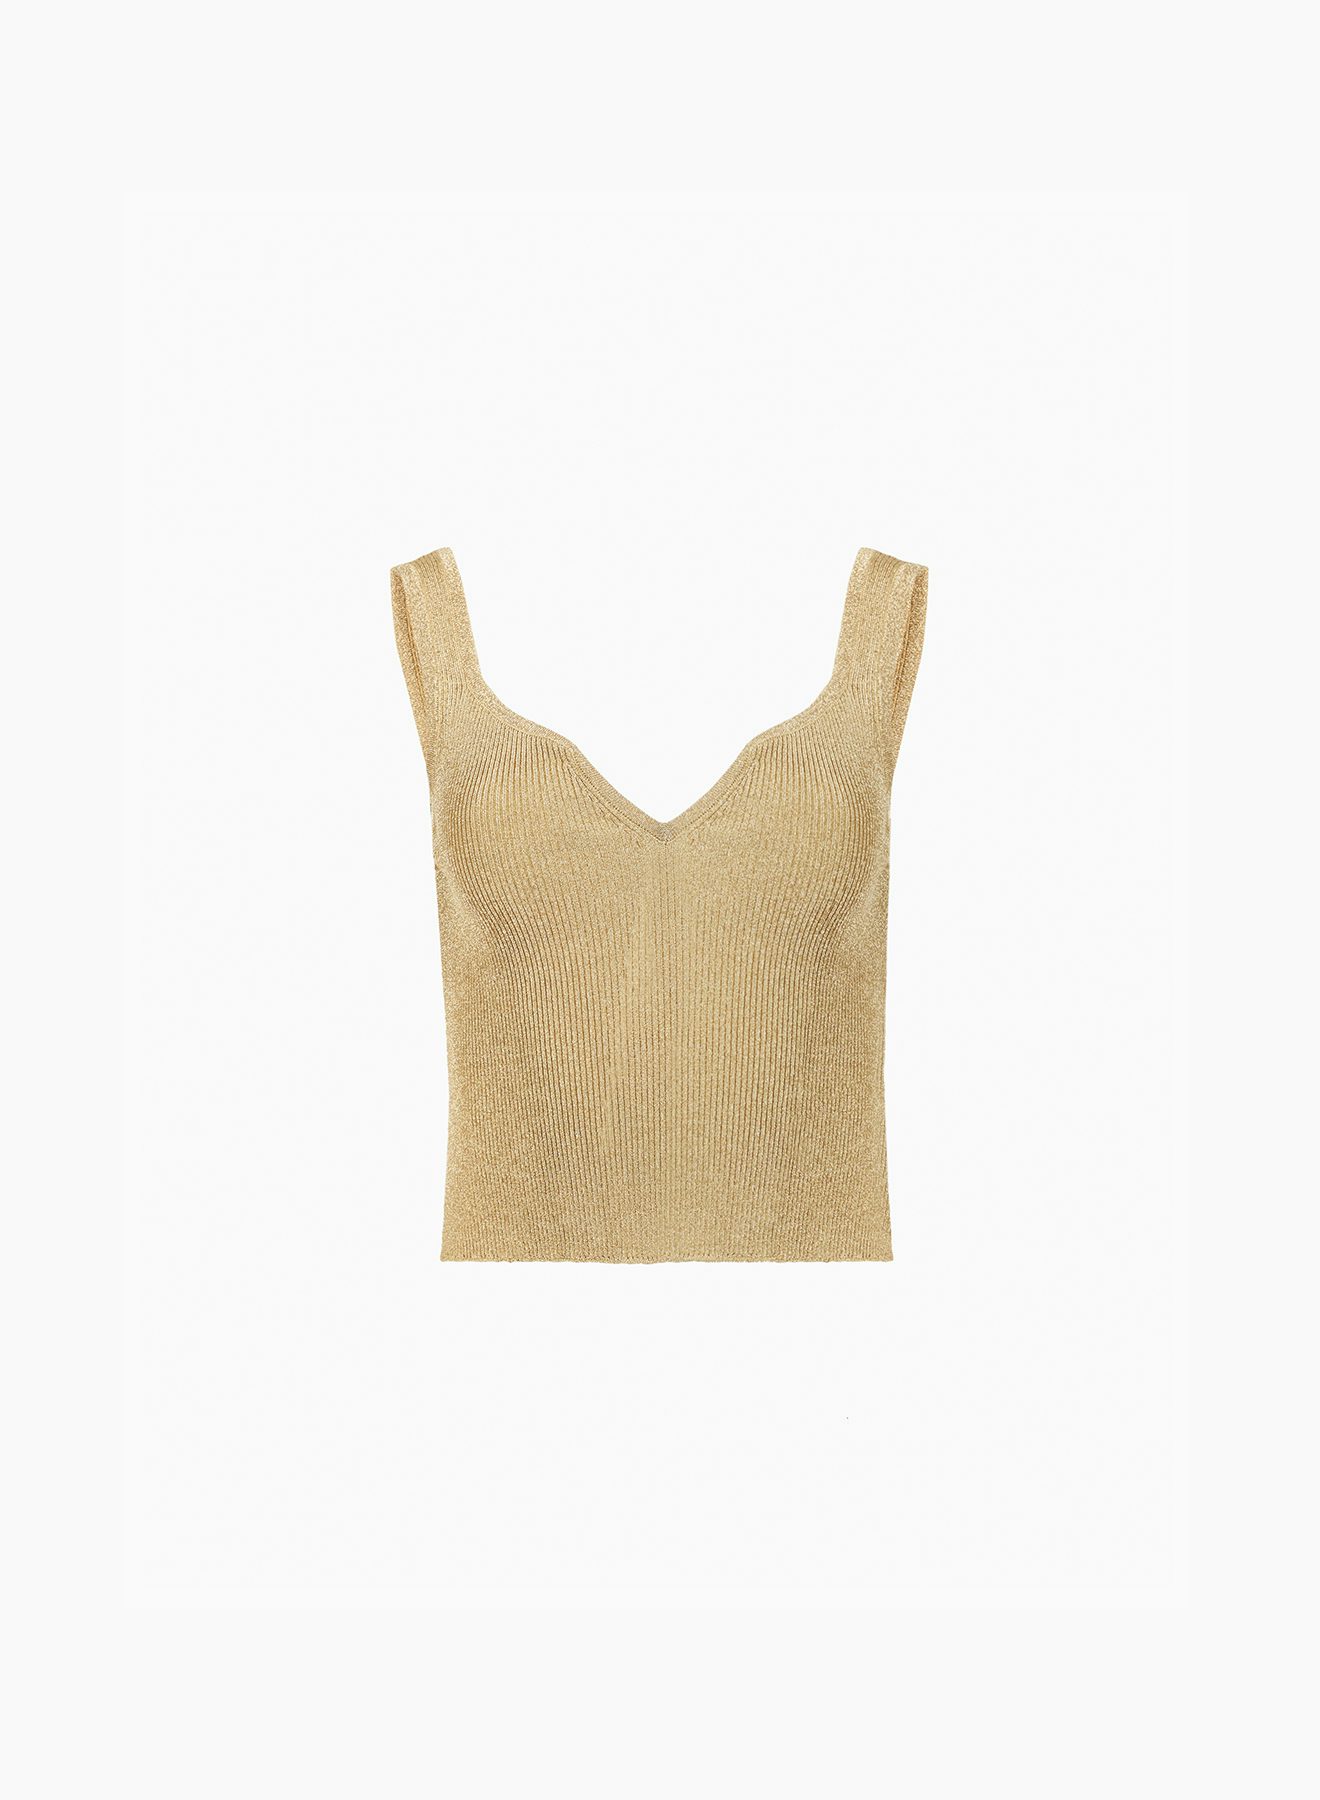 Sleeveless heart neckline top in gold - Nina Ricci